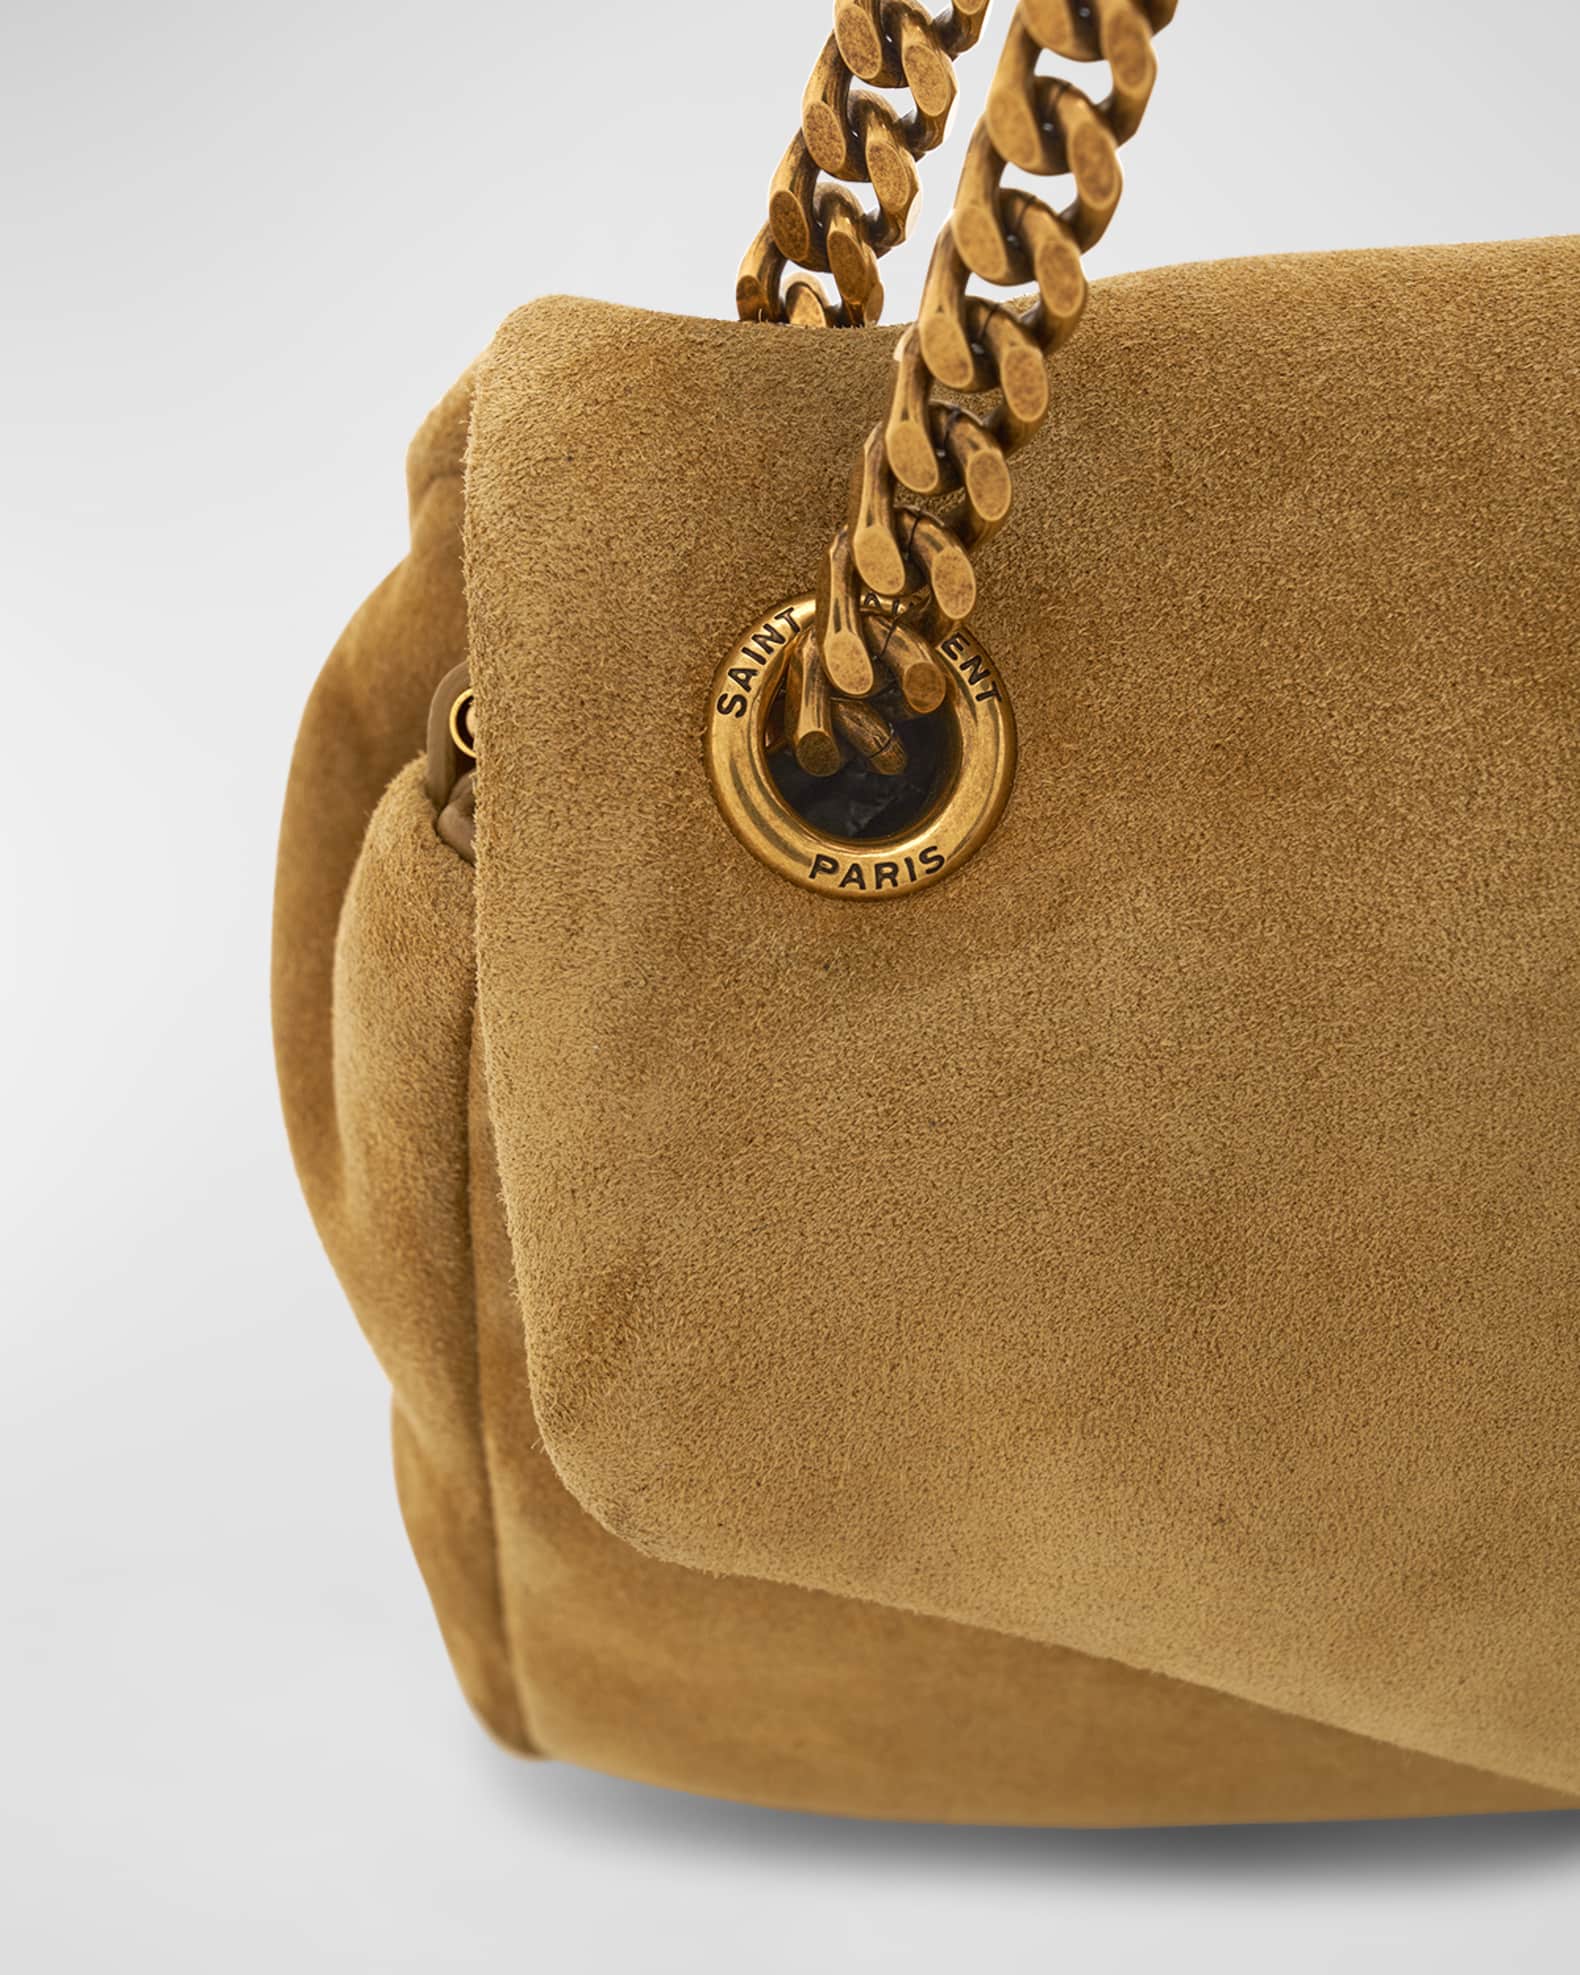 Saint Laurent Calypso - Shoulder bag for Woman - Black - 734153AACQO-1000